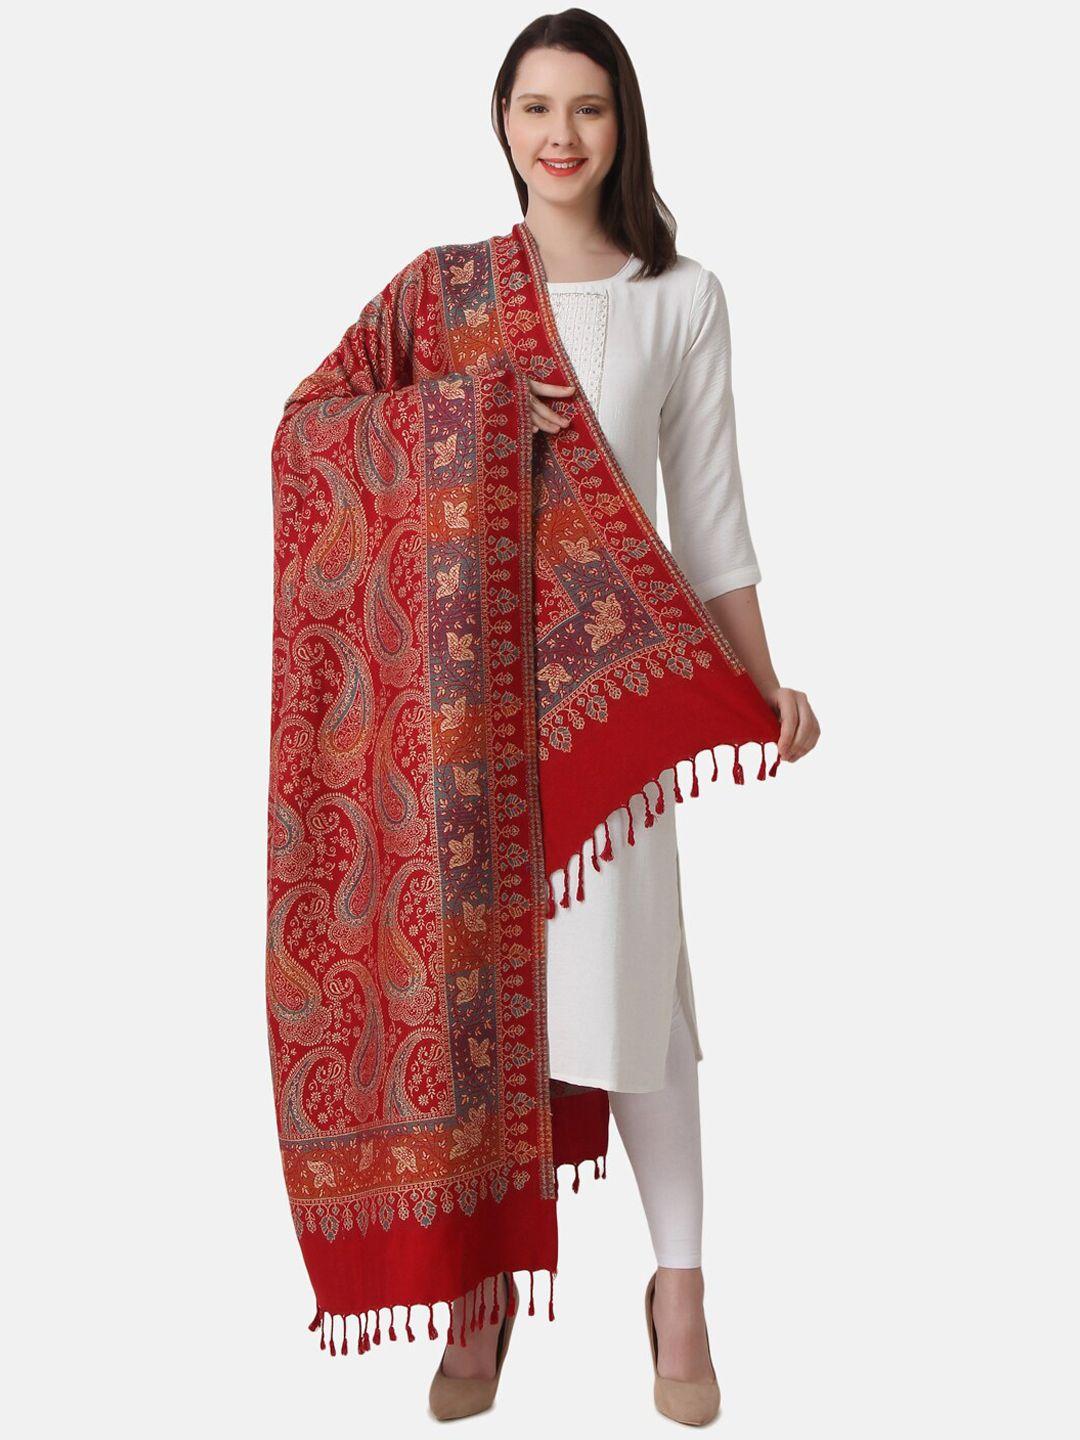 evaz ethnic motifs woven design tasseled acrylic shawl